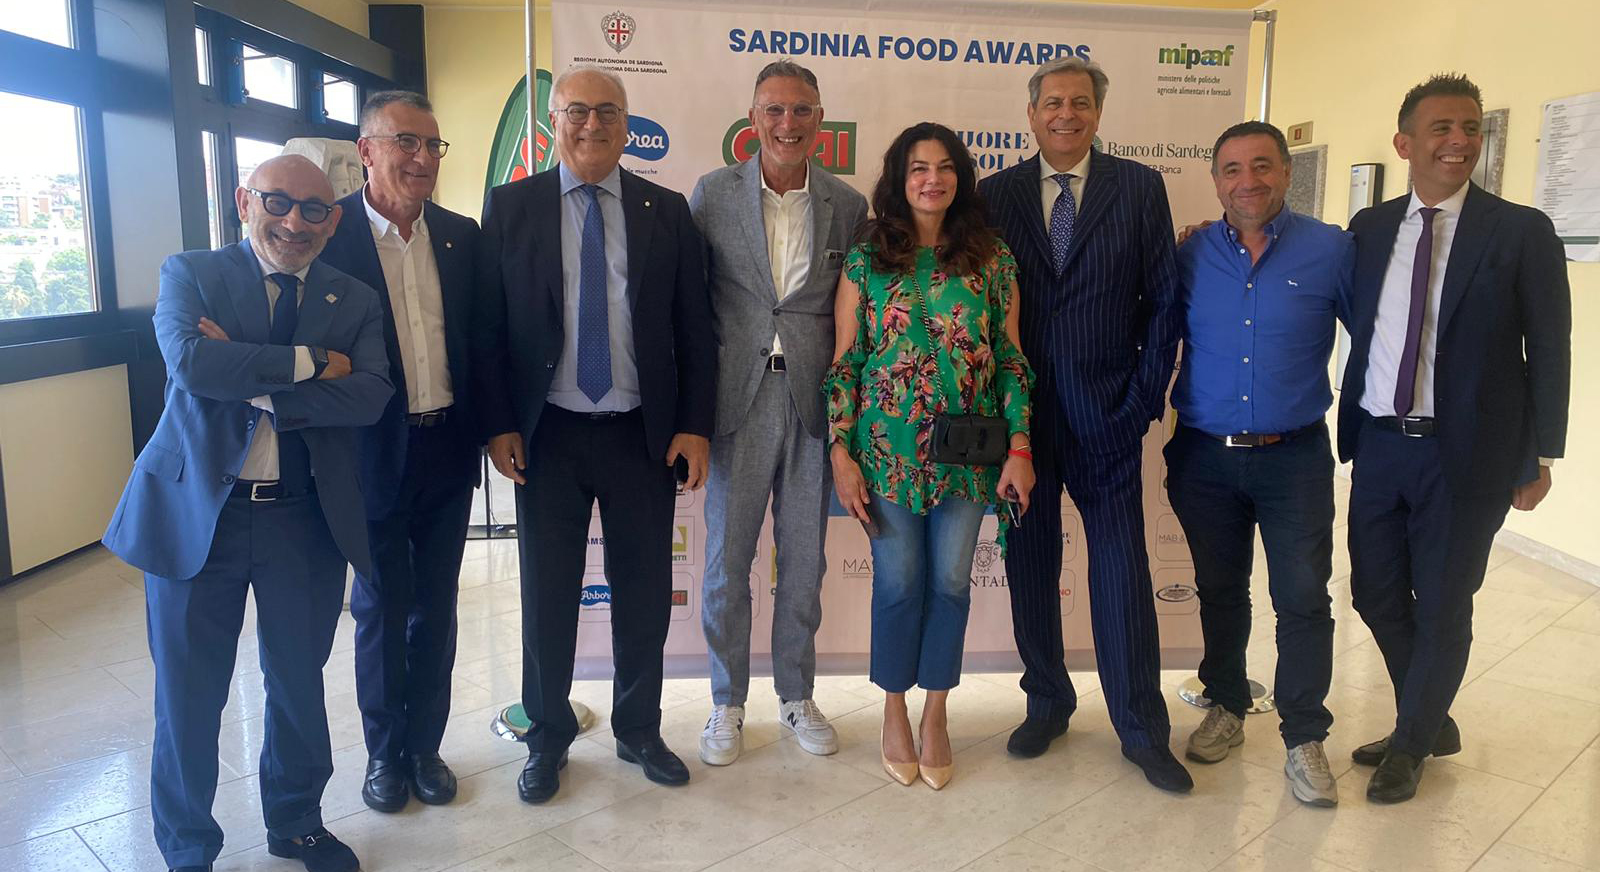 Sardinia Food Awards